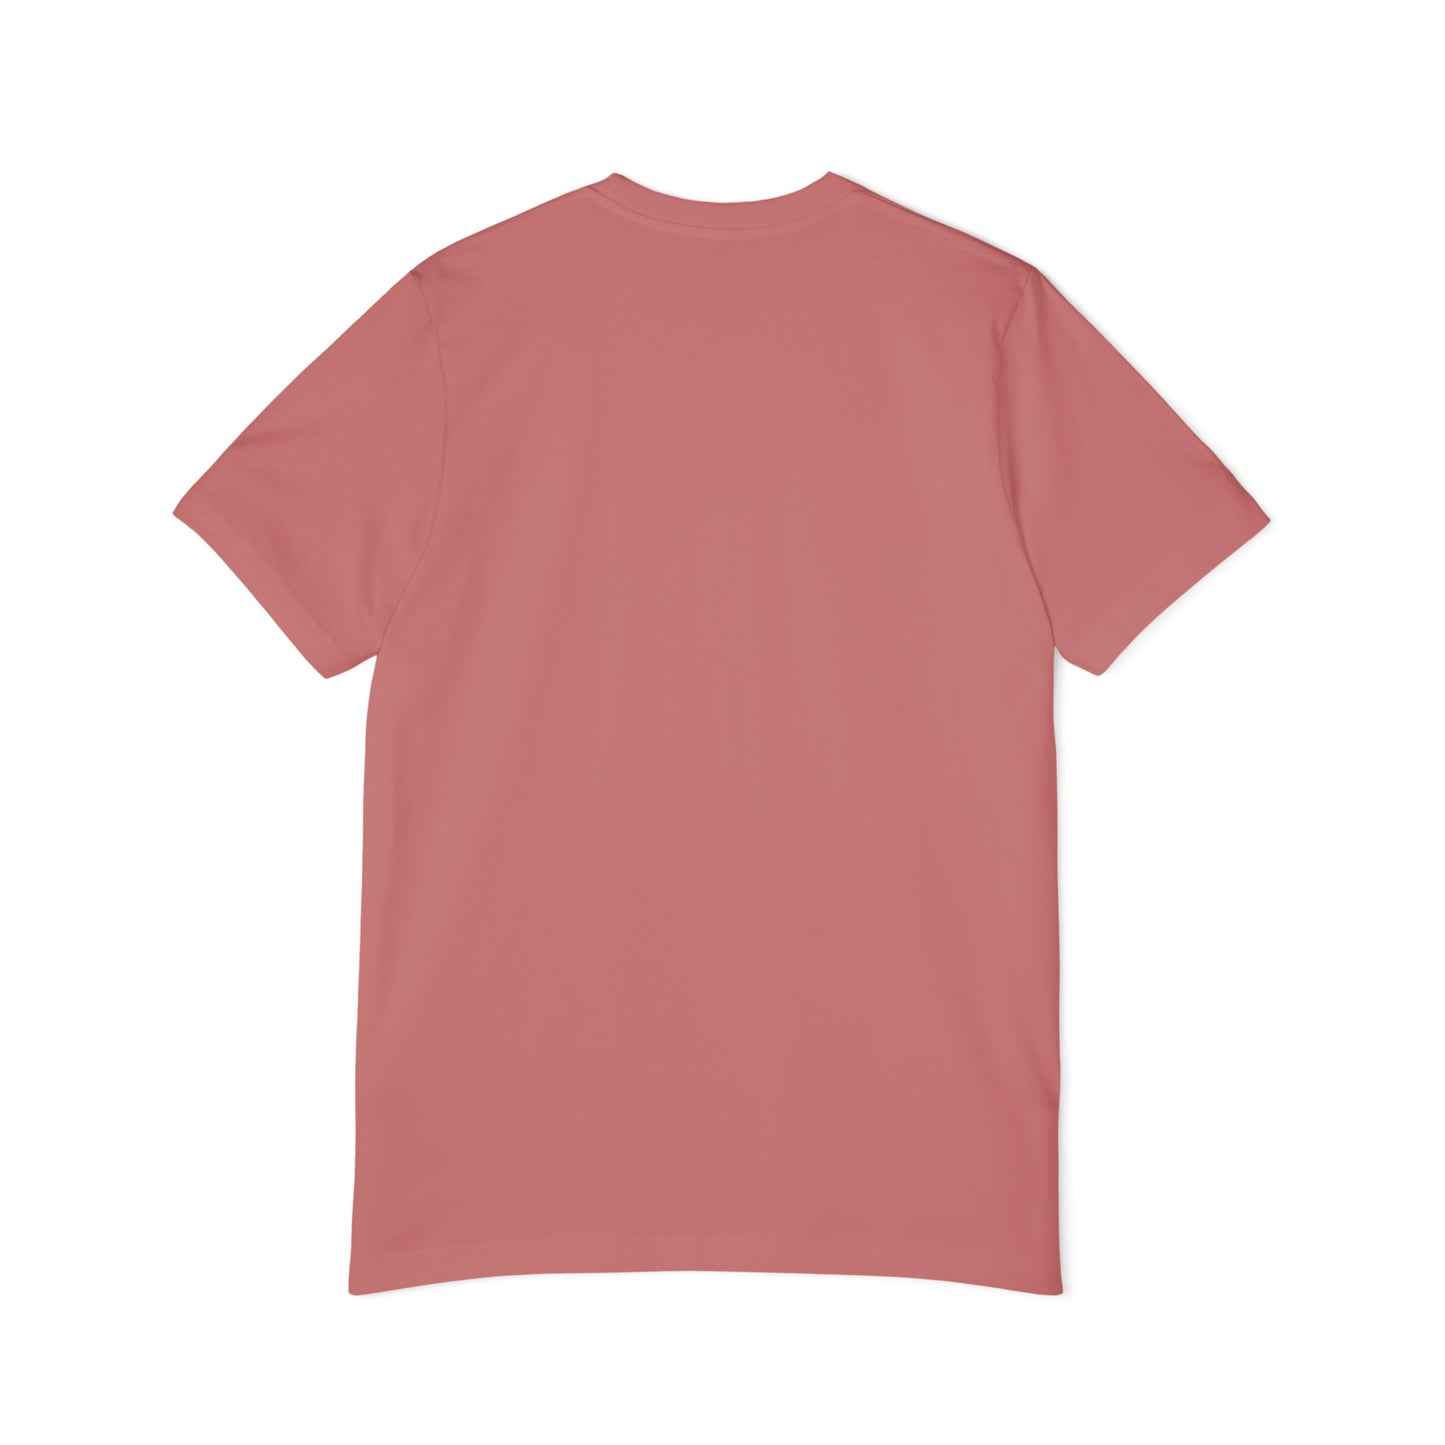 Unisex Short-Sleeve SOLANA BE SOLFULL T-Shirt